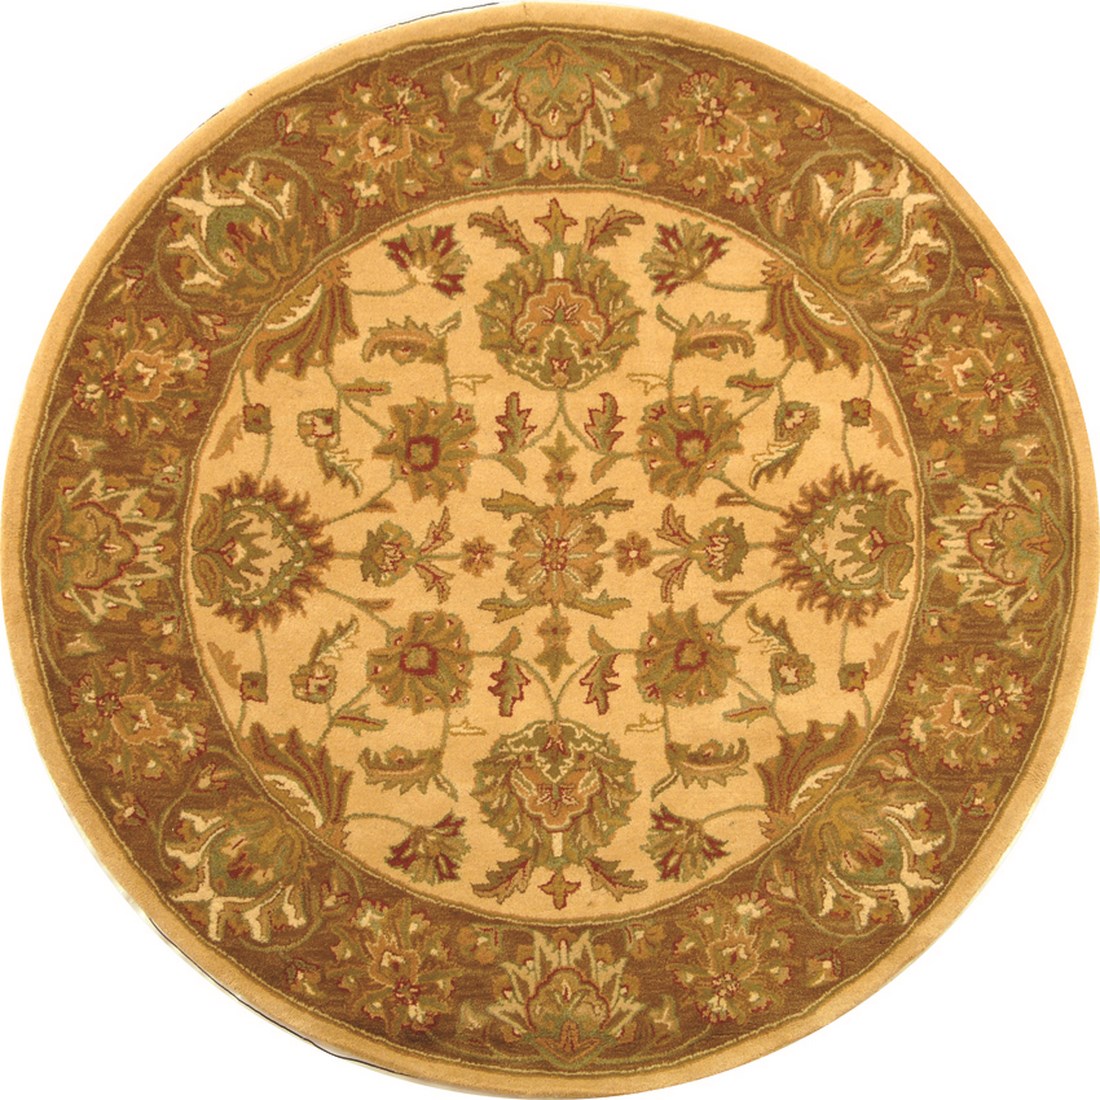 SAFAVIEH Heritage Regis Traditional Wool Area Rug, Ivory/Brown, 8' x 8' Round - image 1 of 9